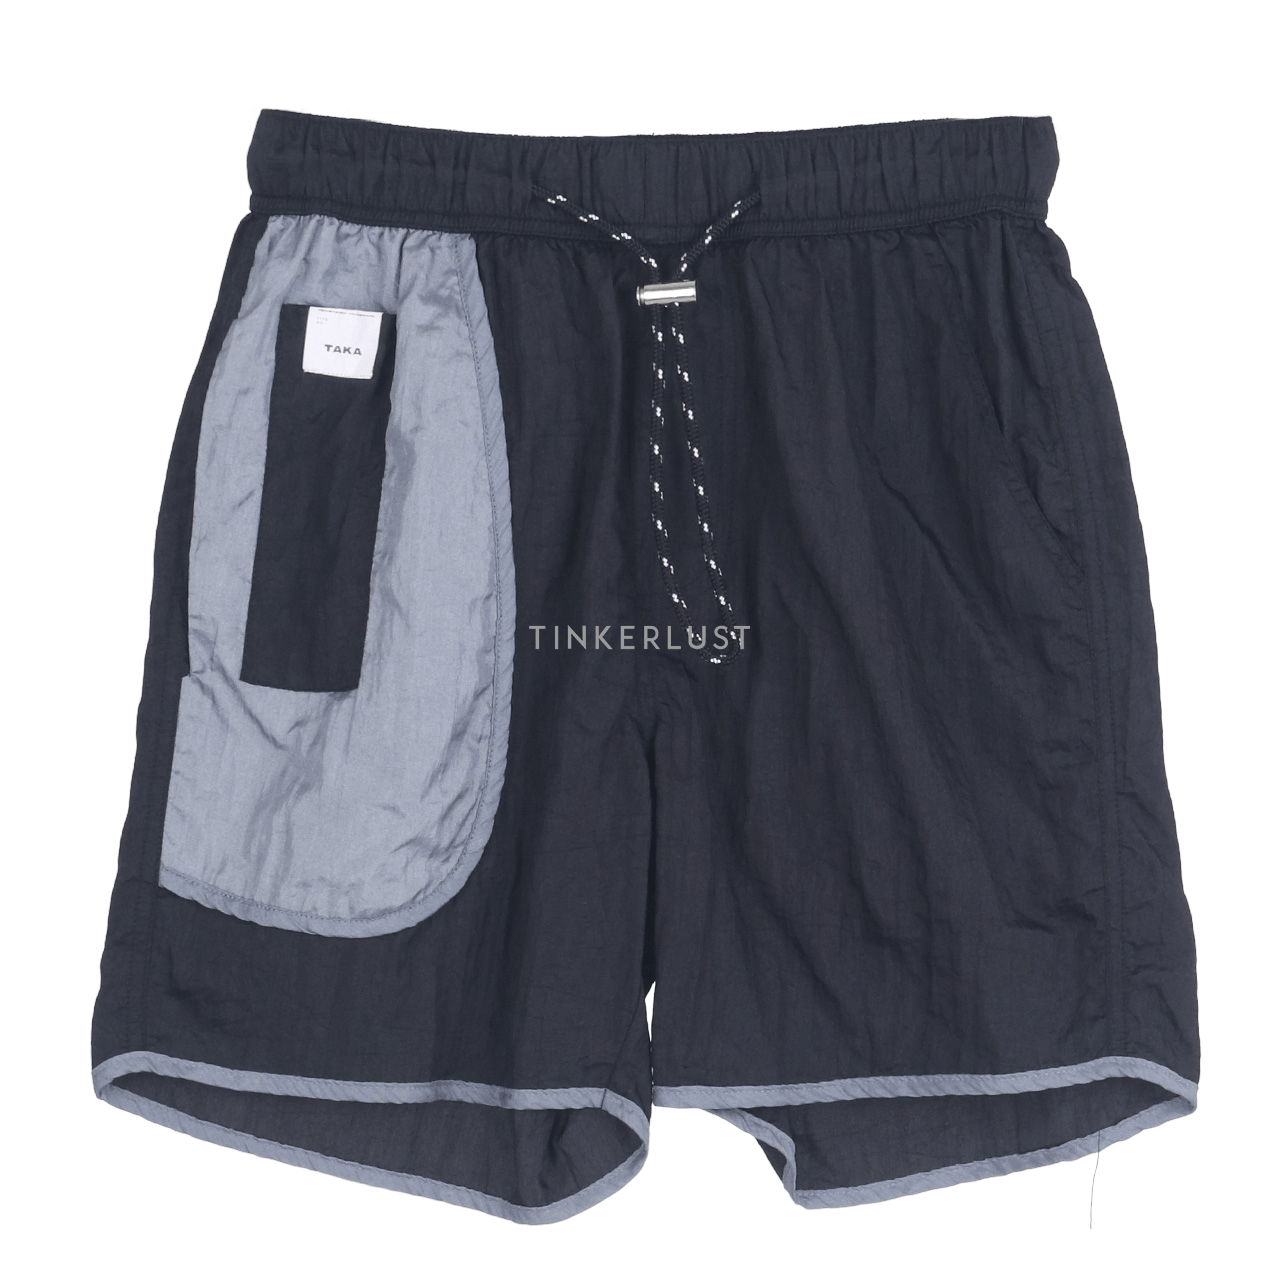 Taka Black & Grey Short Pants